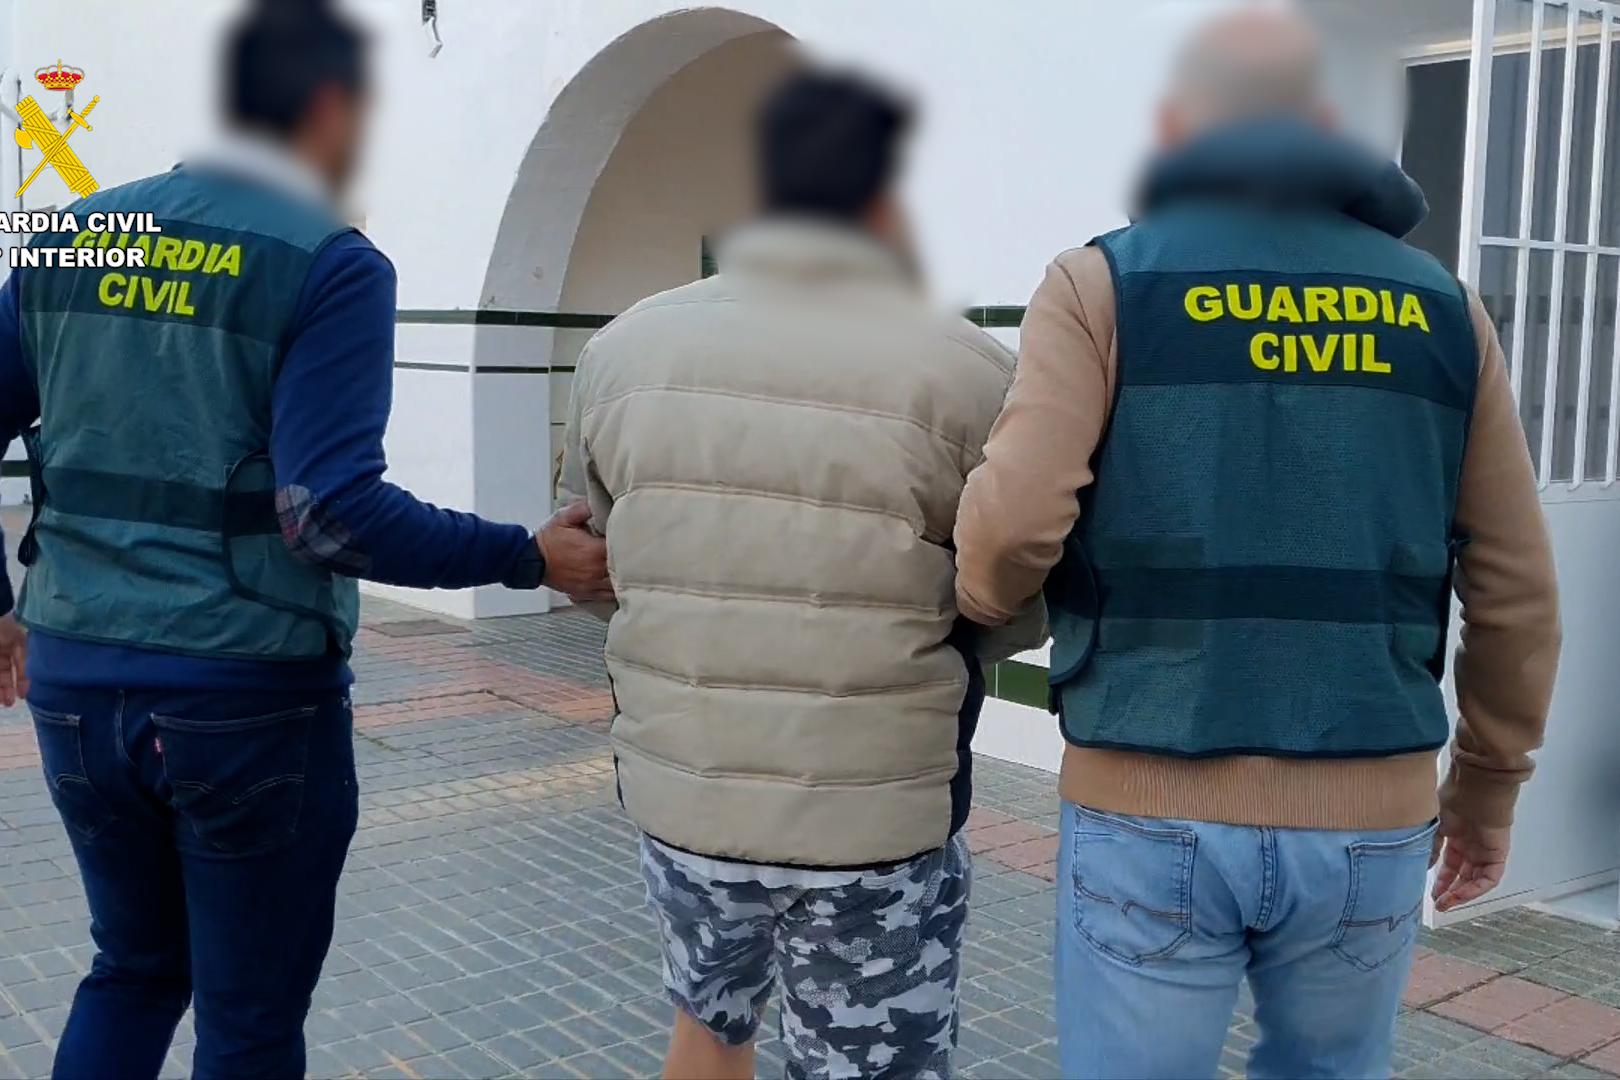 Agentes de la Guardia Civil custodian y trasladan al detenido